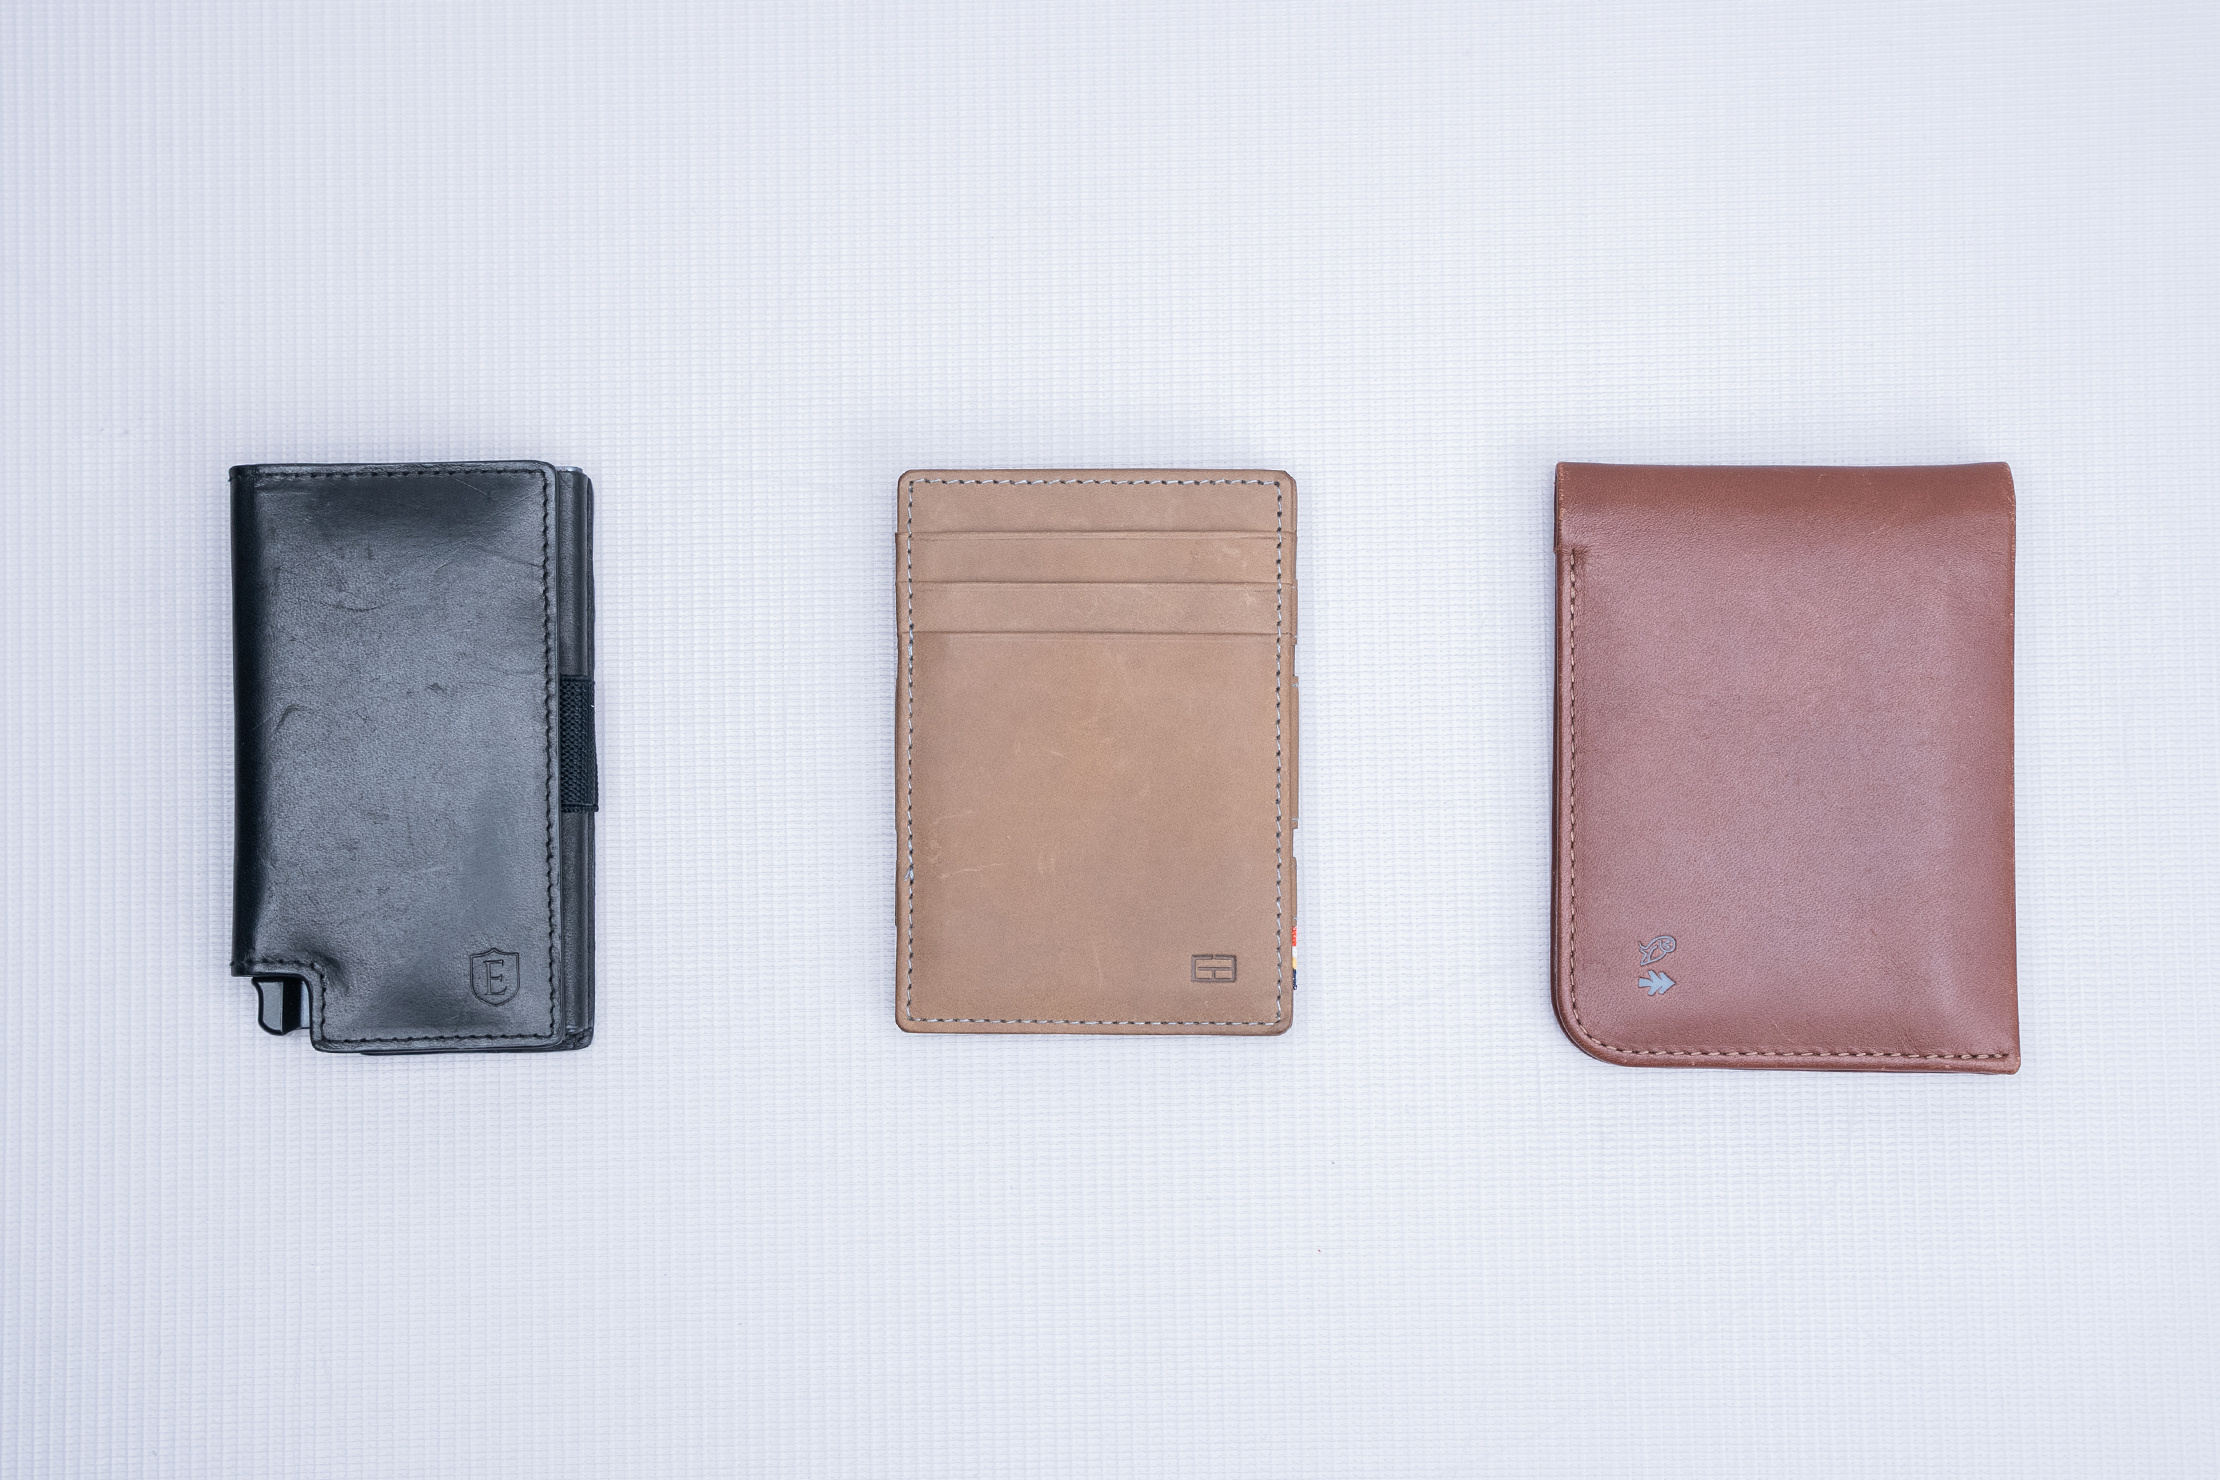 Garzini Essenziale Magic Wallet Comparison